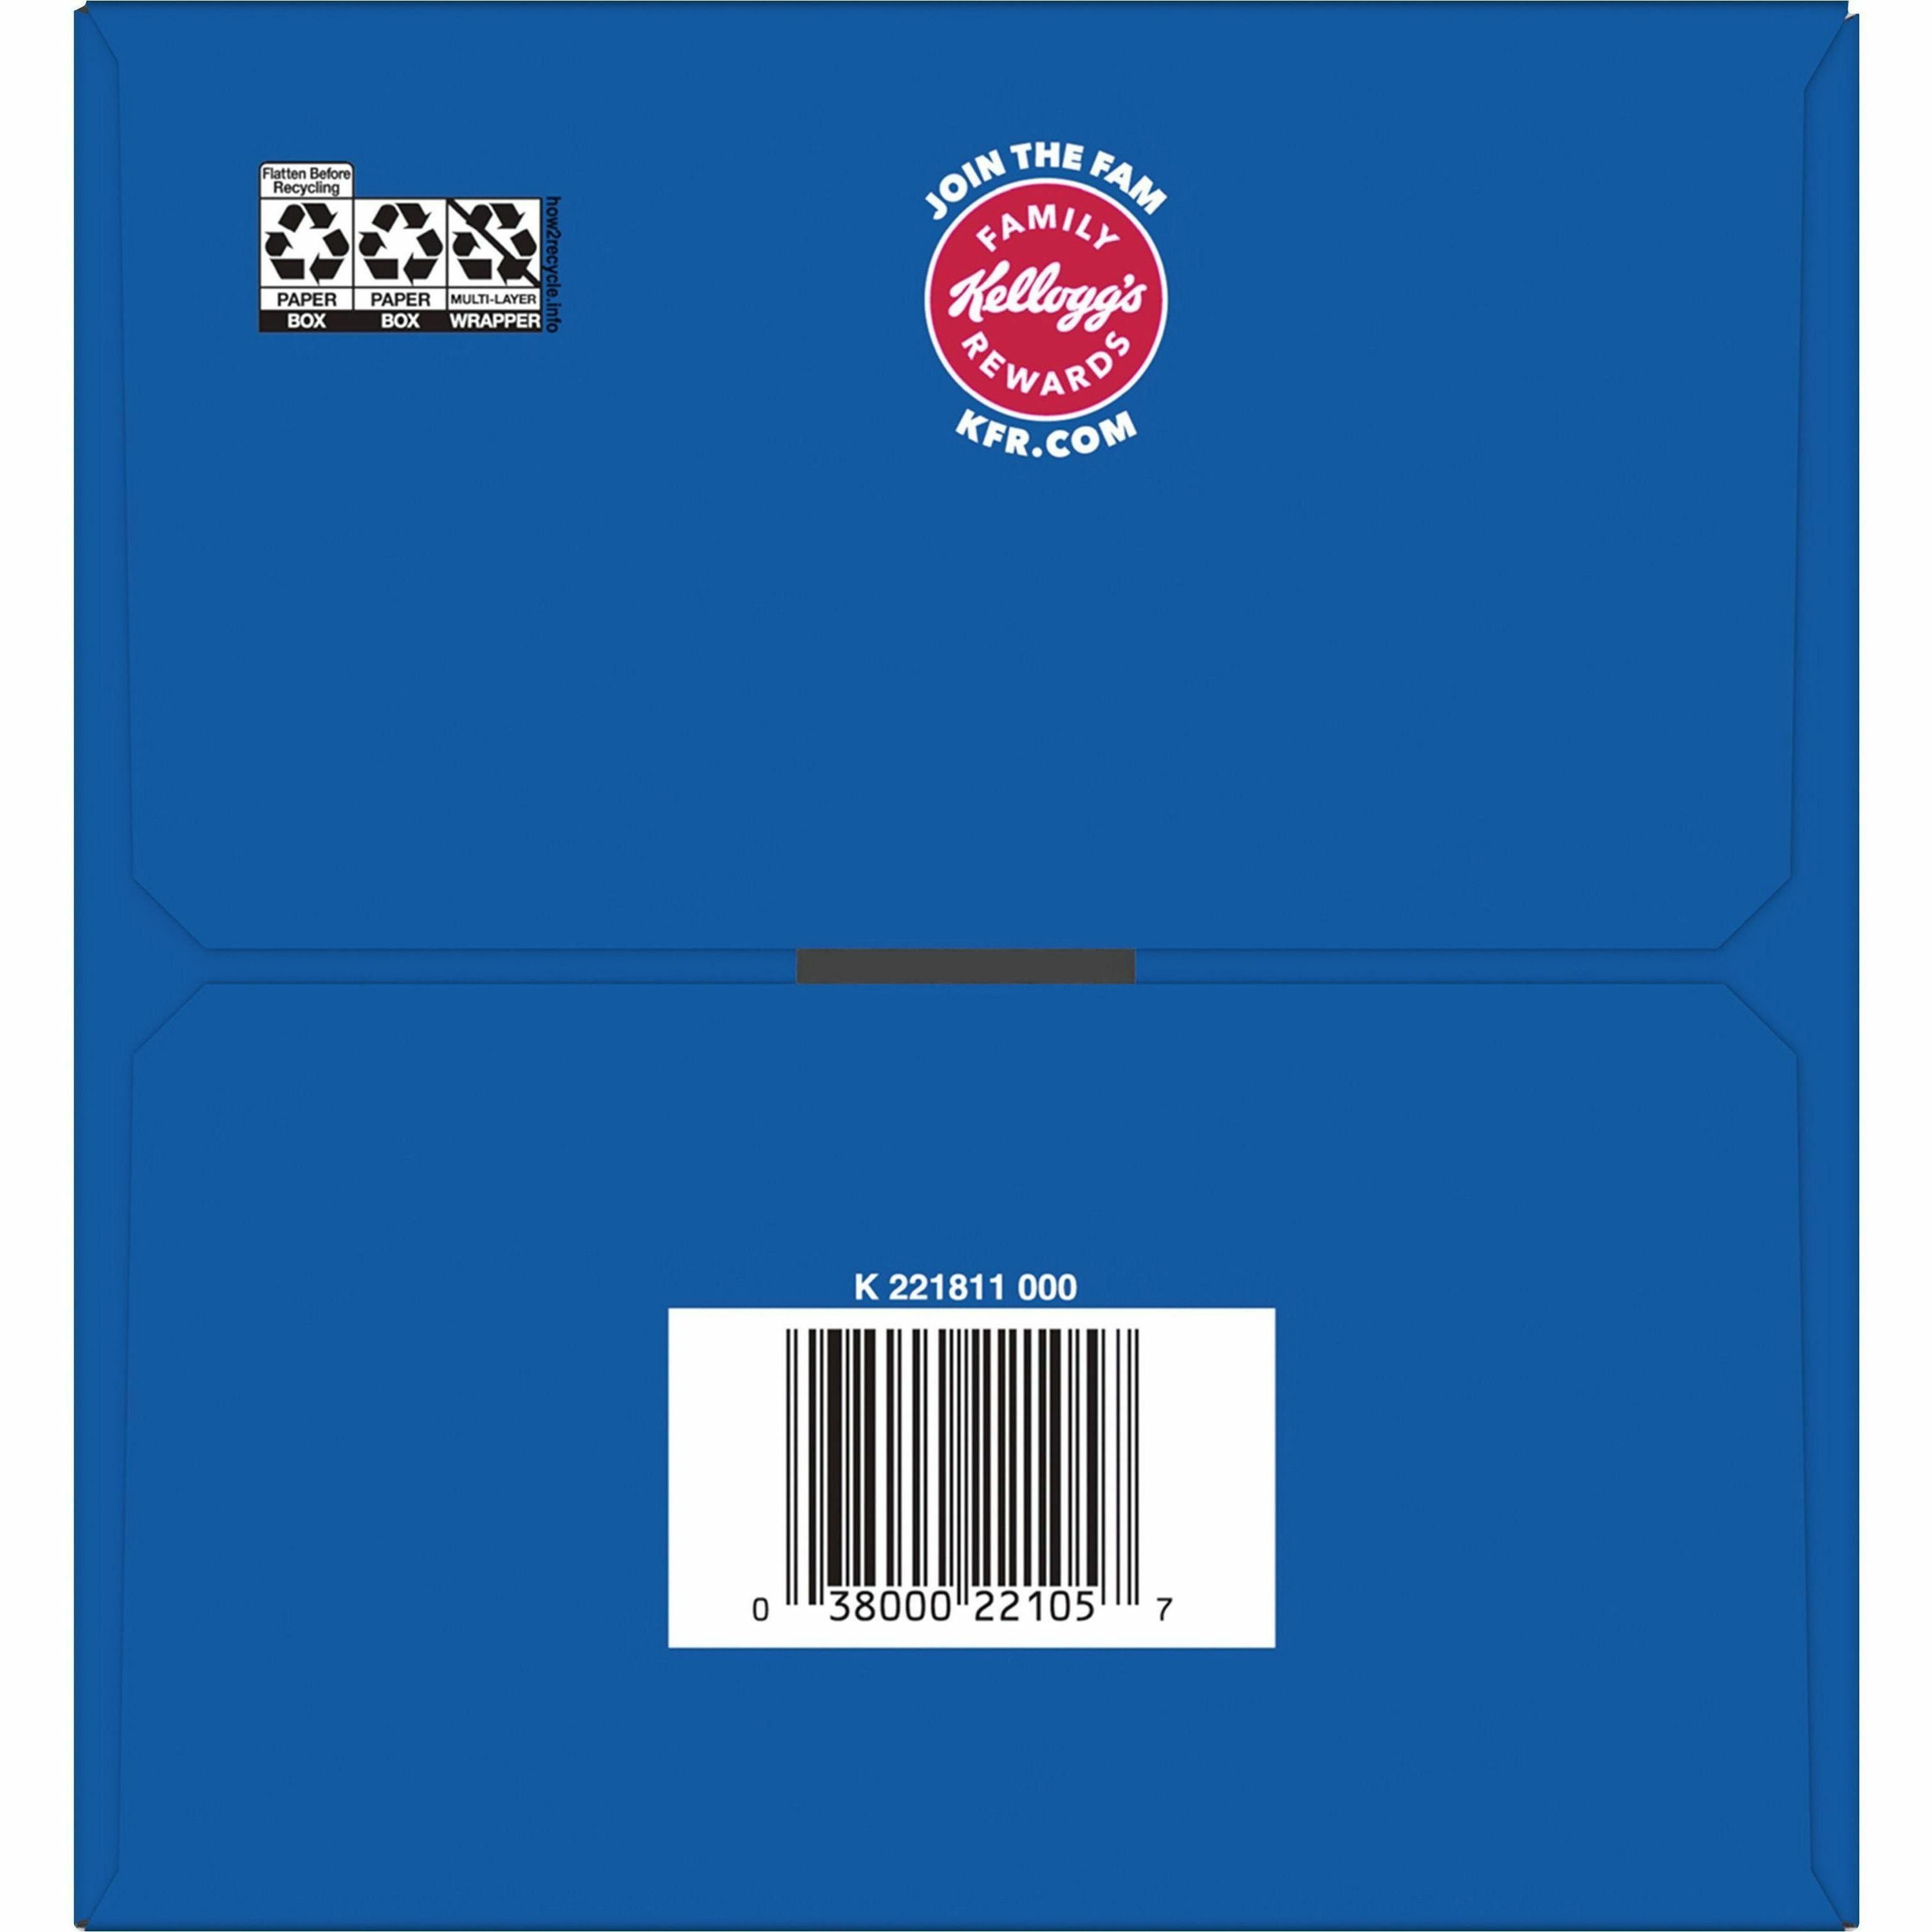 pop-tarts-variety-pack-assorted-269-lb-48-box_keb22095 - 2